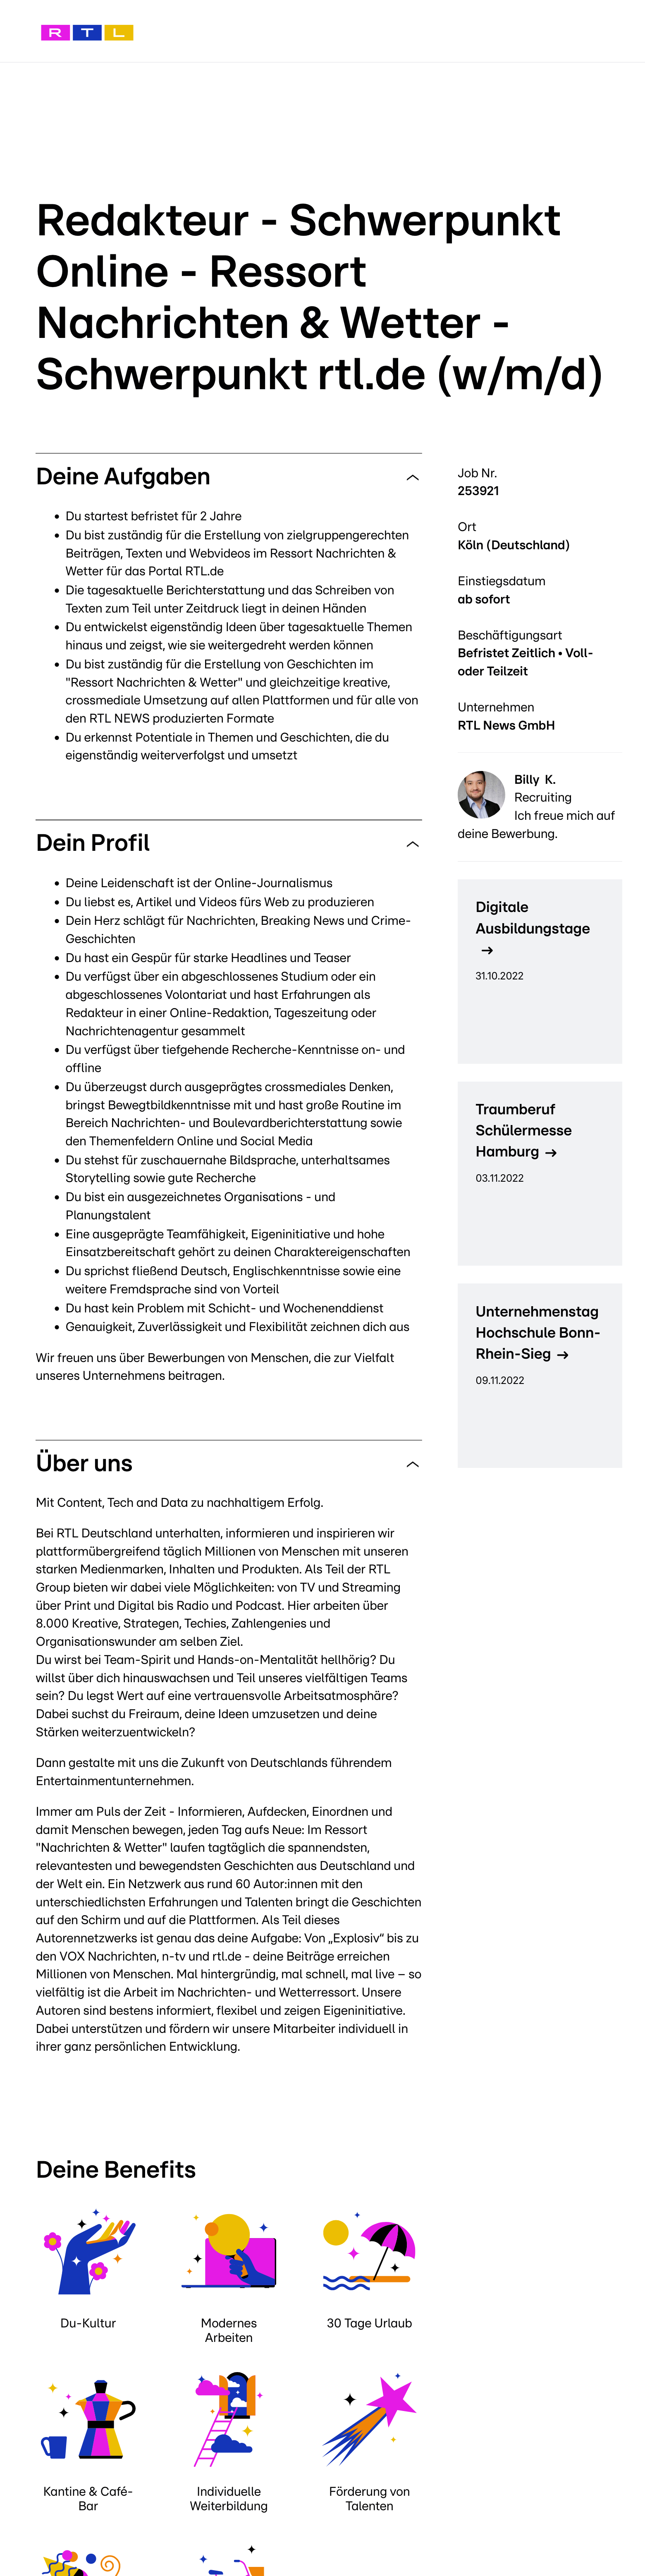 Redakteur - Schwp. Online - Ressort Nachrichten & Wetter - Schwp. rtl.de (w/m/d)